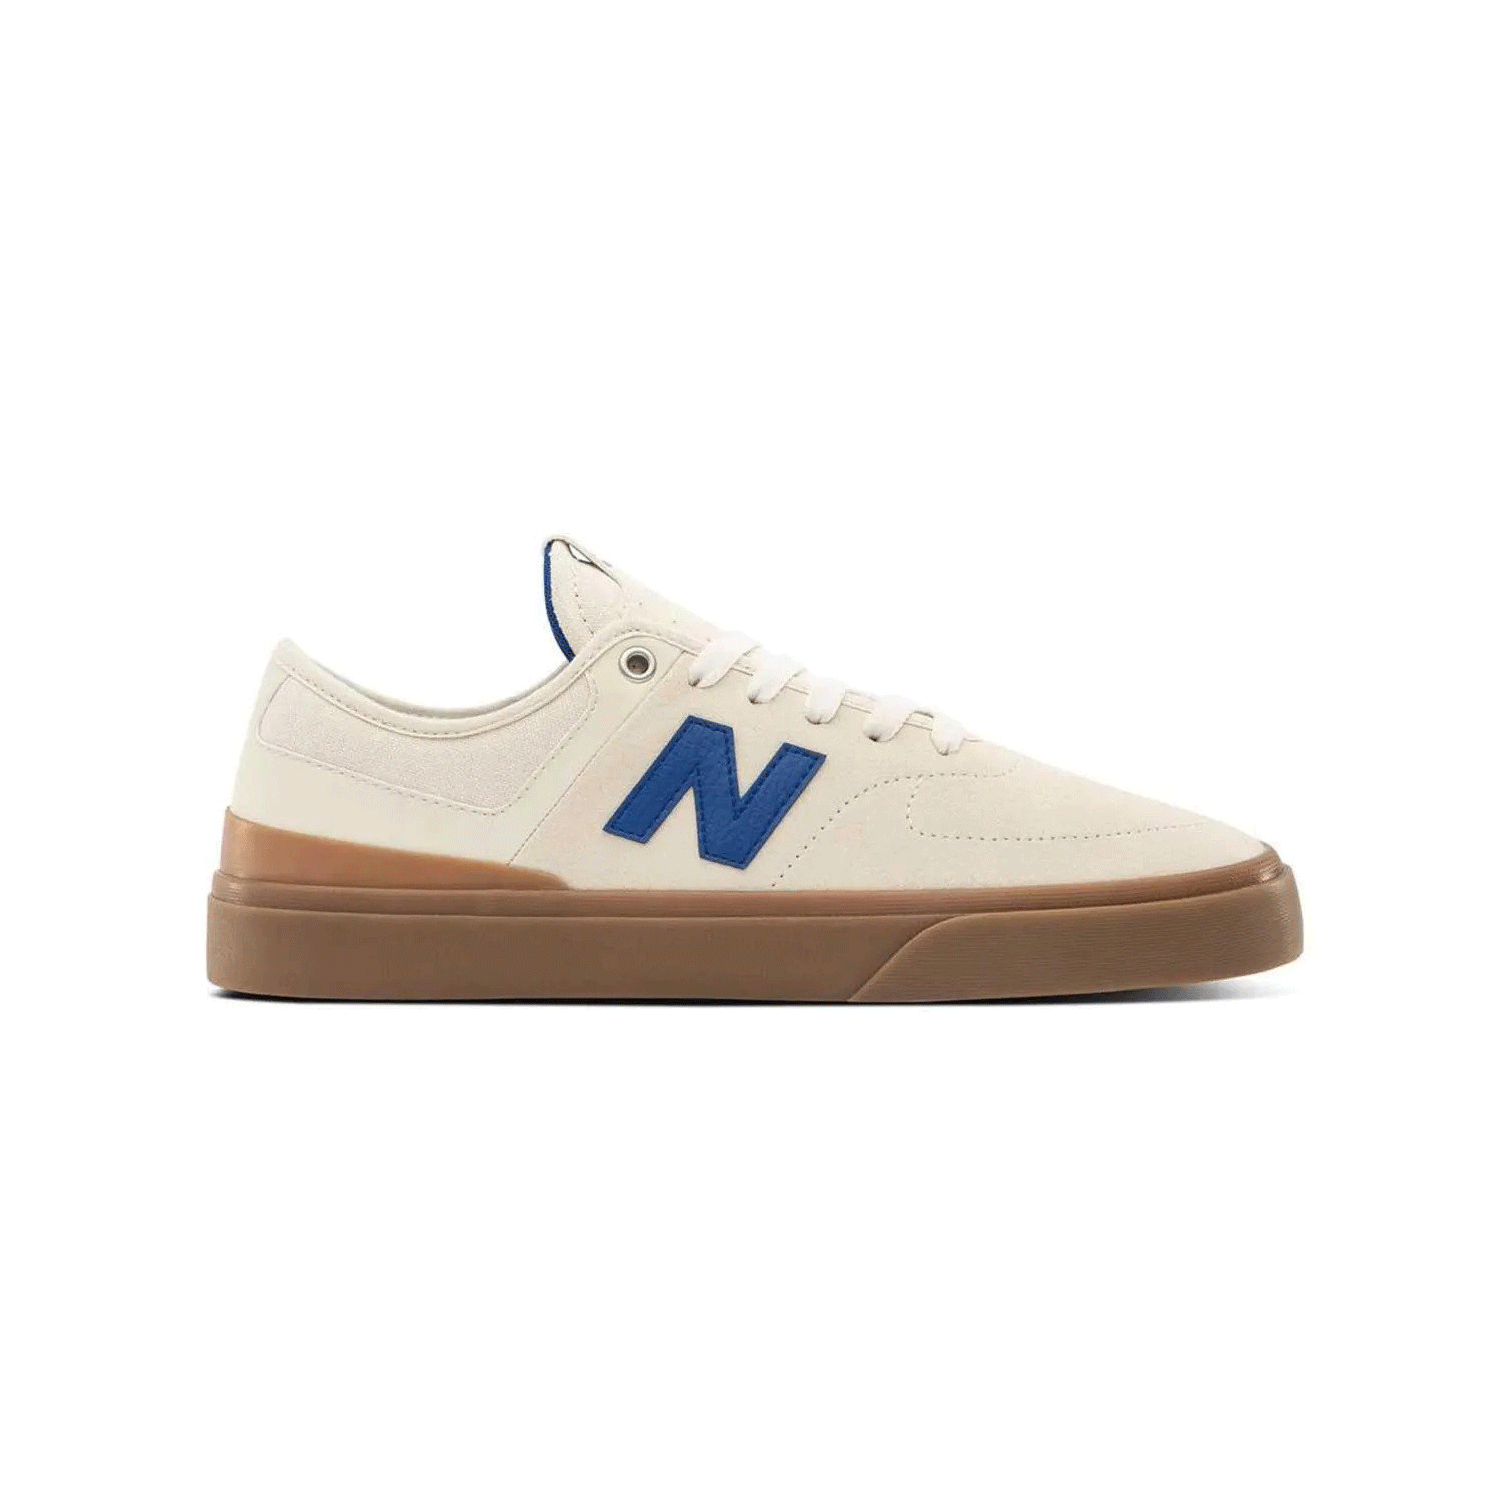 New Balance Numeric - 379 - Cream SALE